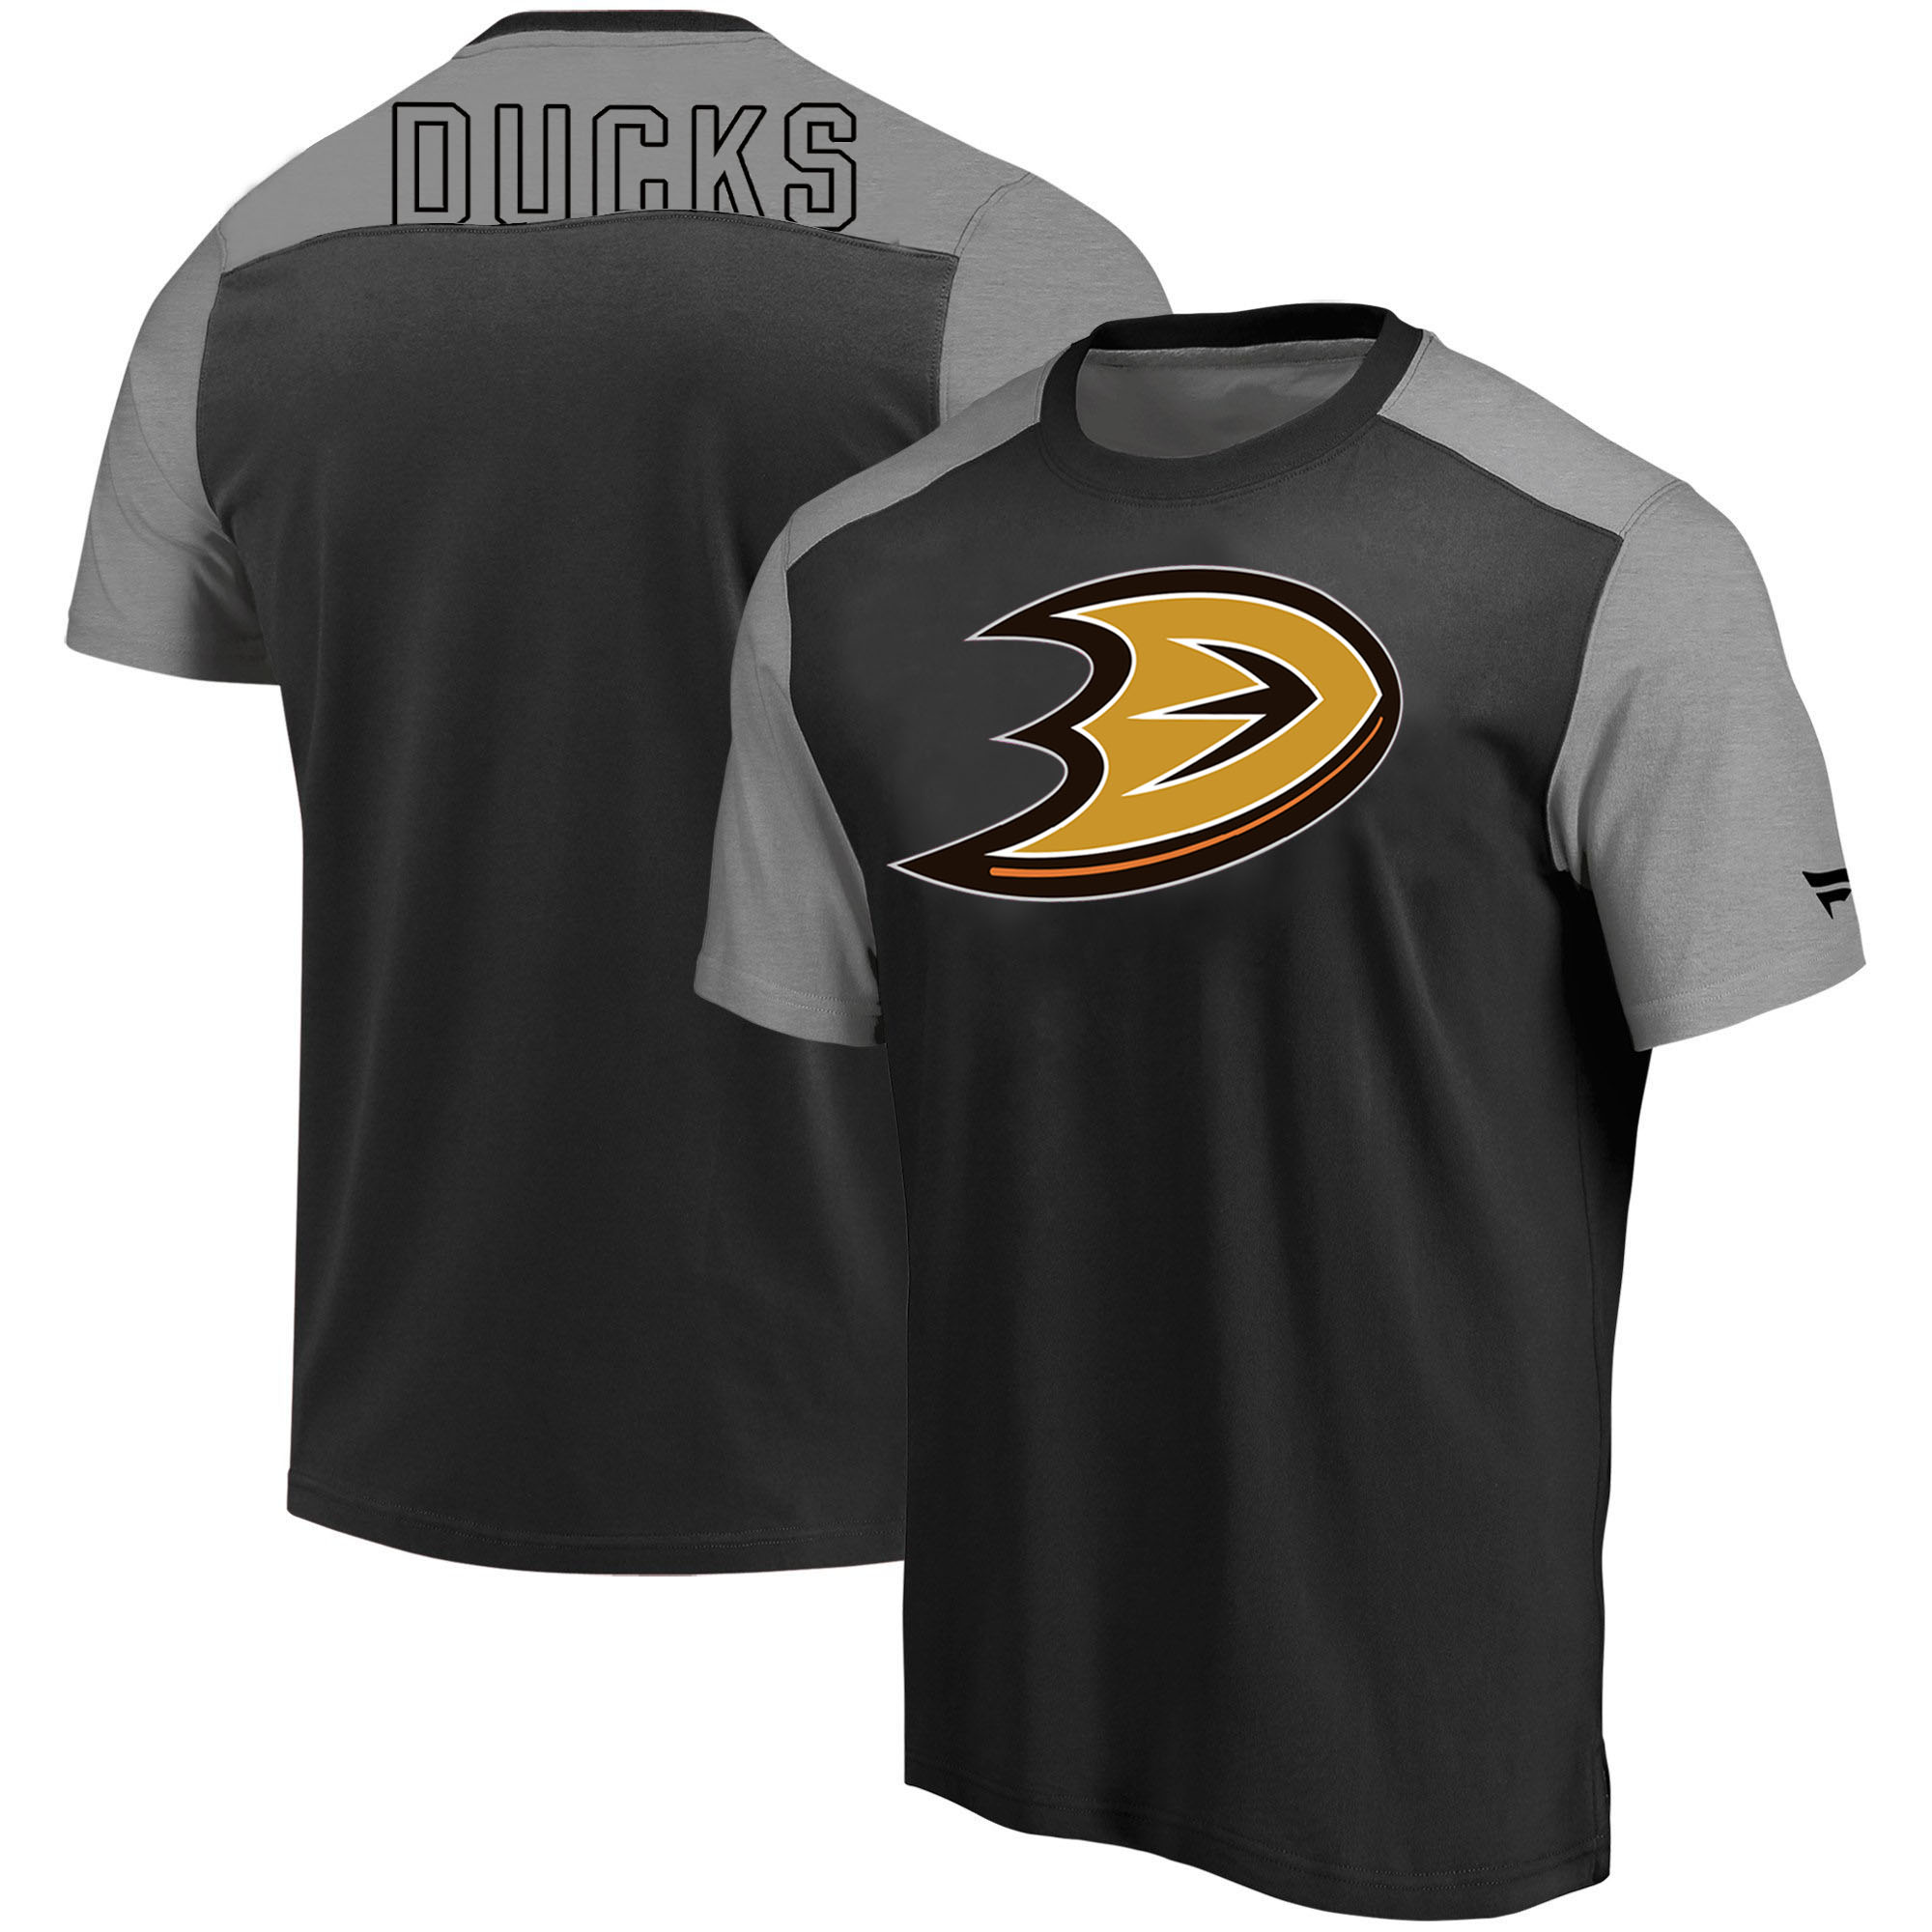 Anaheim Ducks Fanatics Branded Iconic Blocked T-Shirt Black Heathered Gray